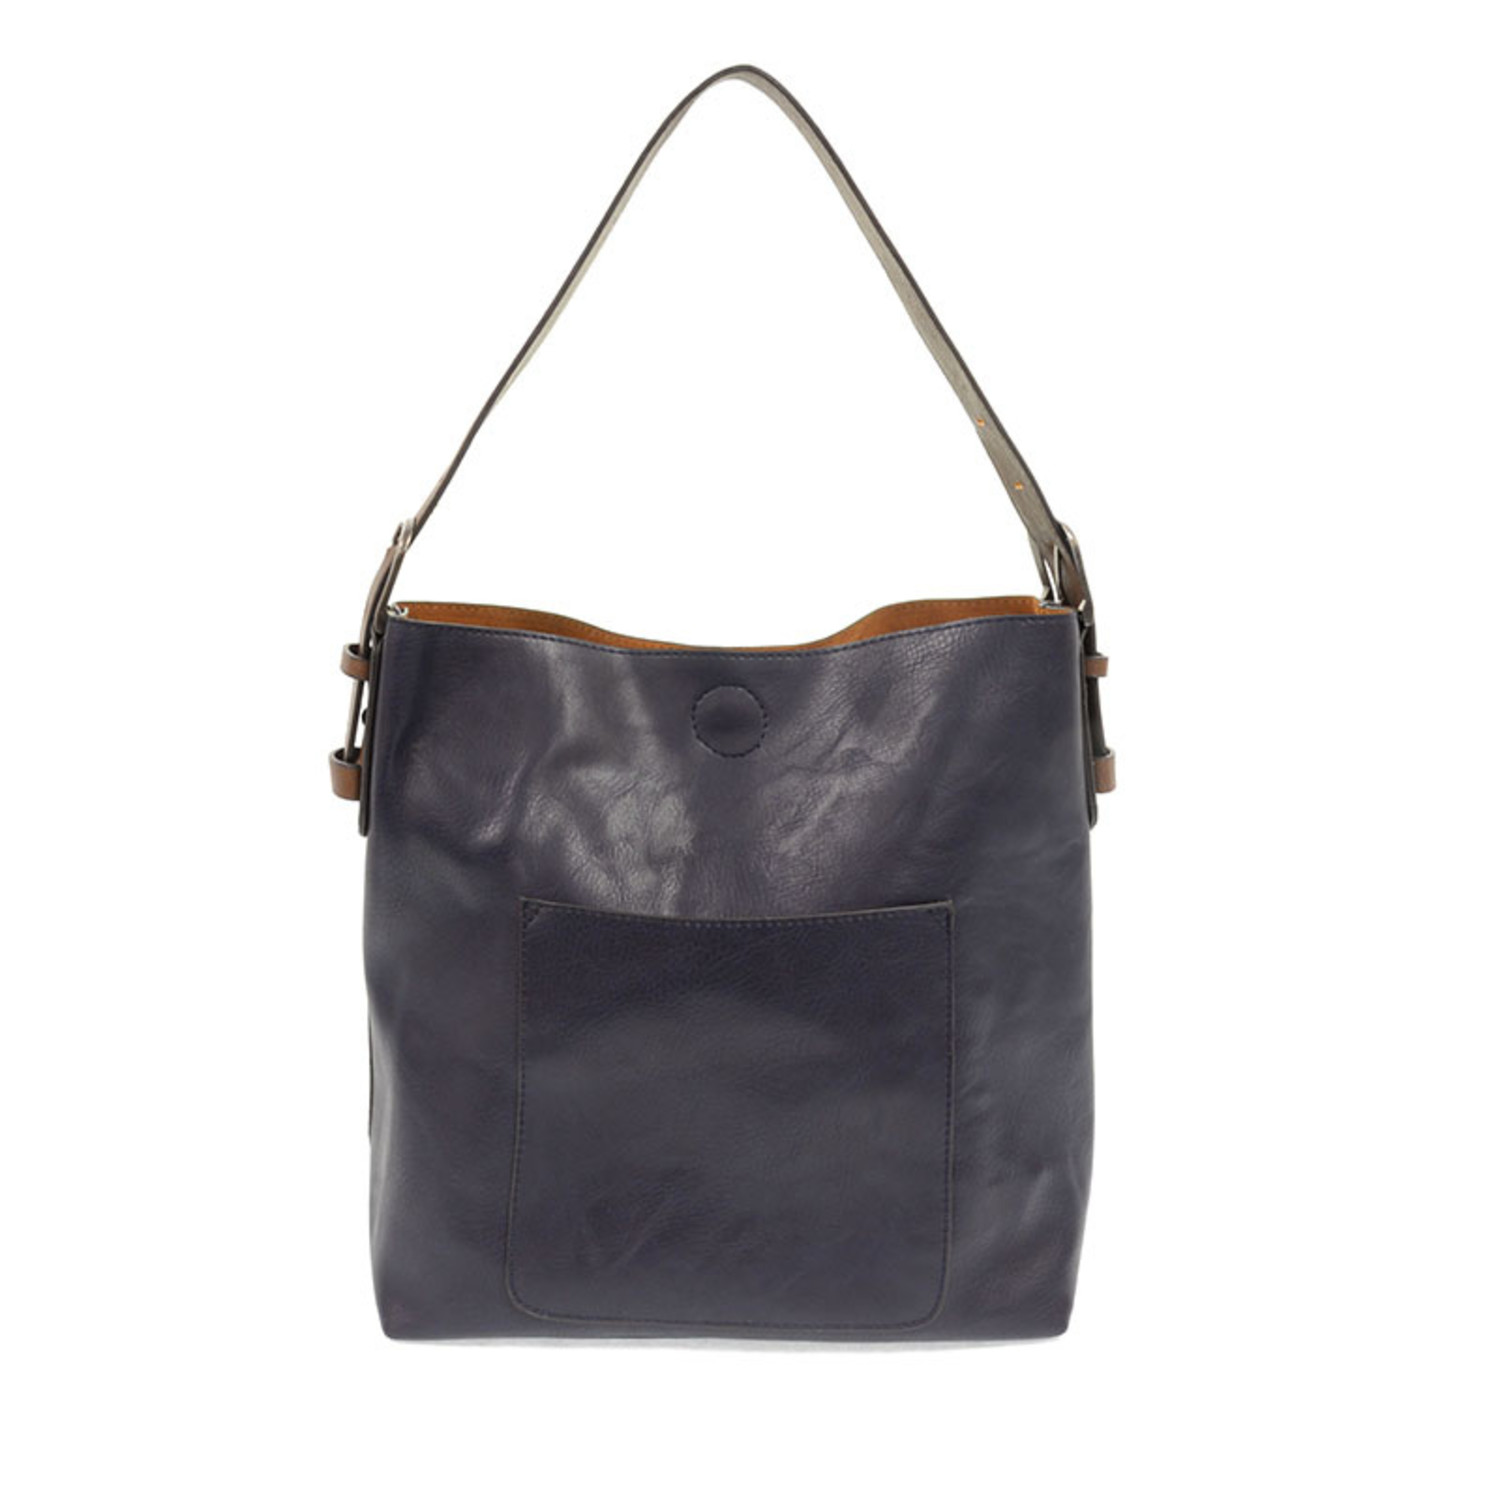 Buy Tomas Women's Hobo Bag -ACPL-1063(Blue) at Amazon.in